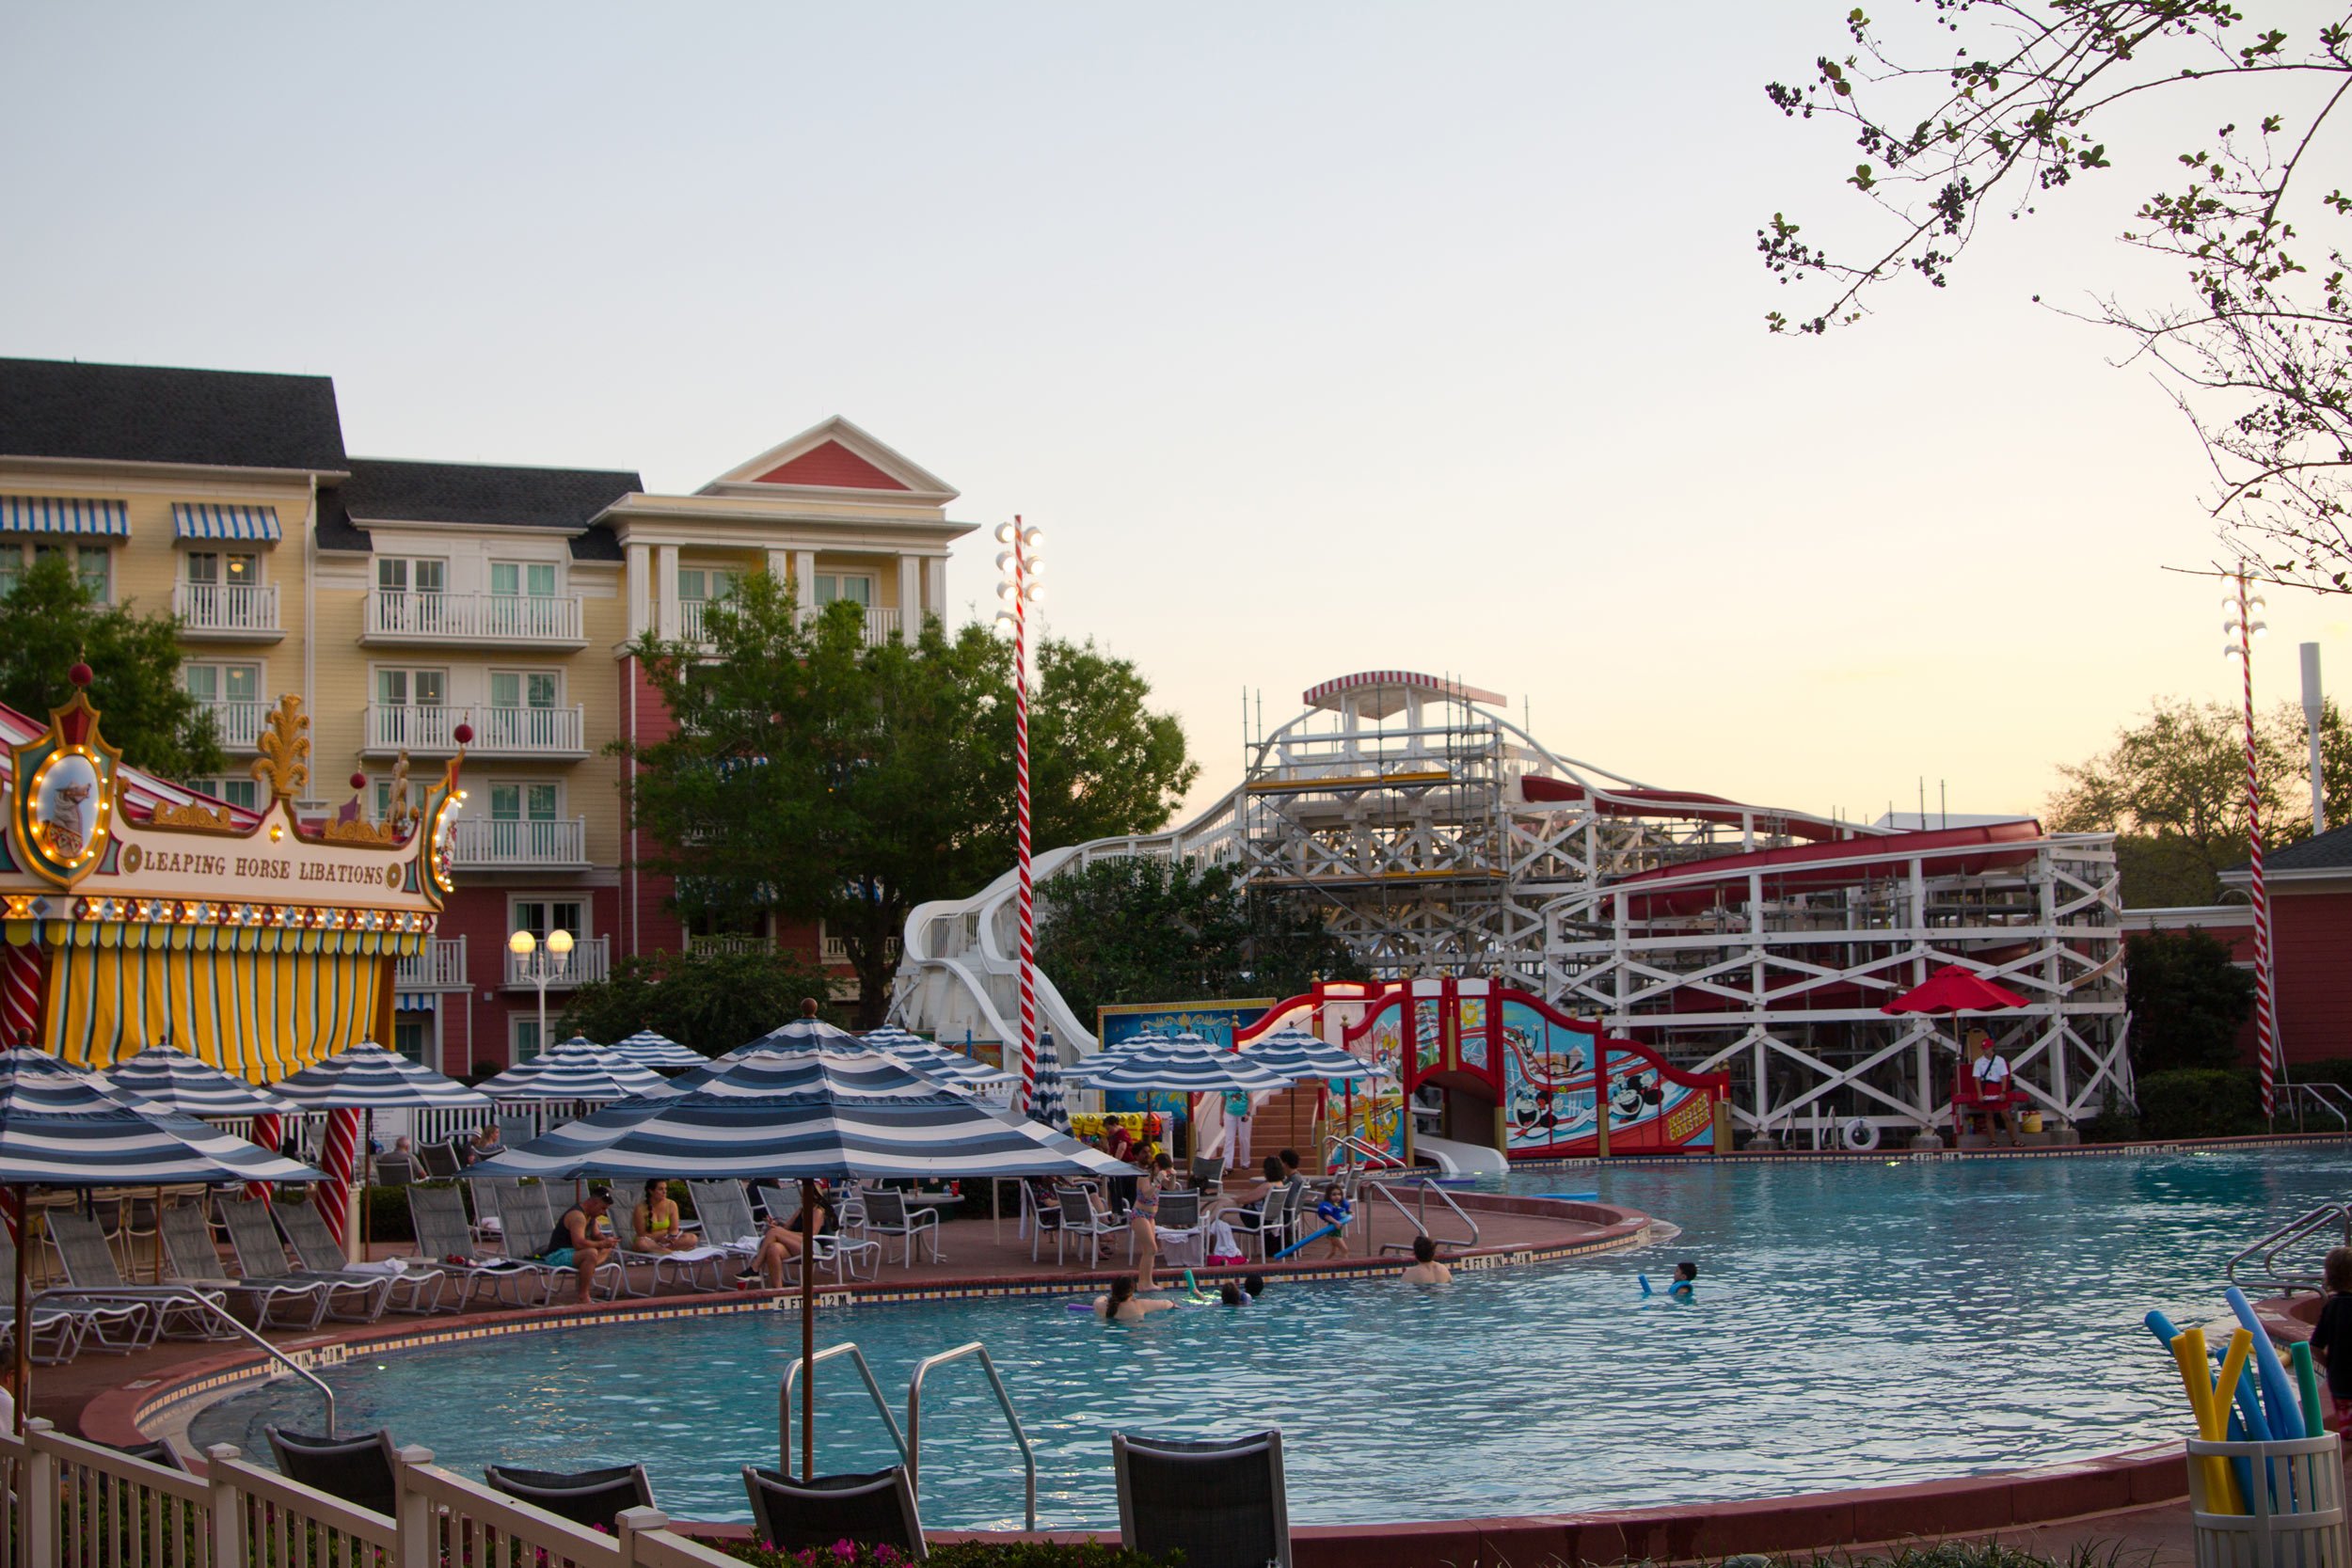 Disneys-Boardwalk-resort-pool-carnival-themed